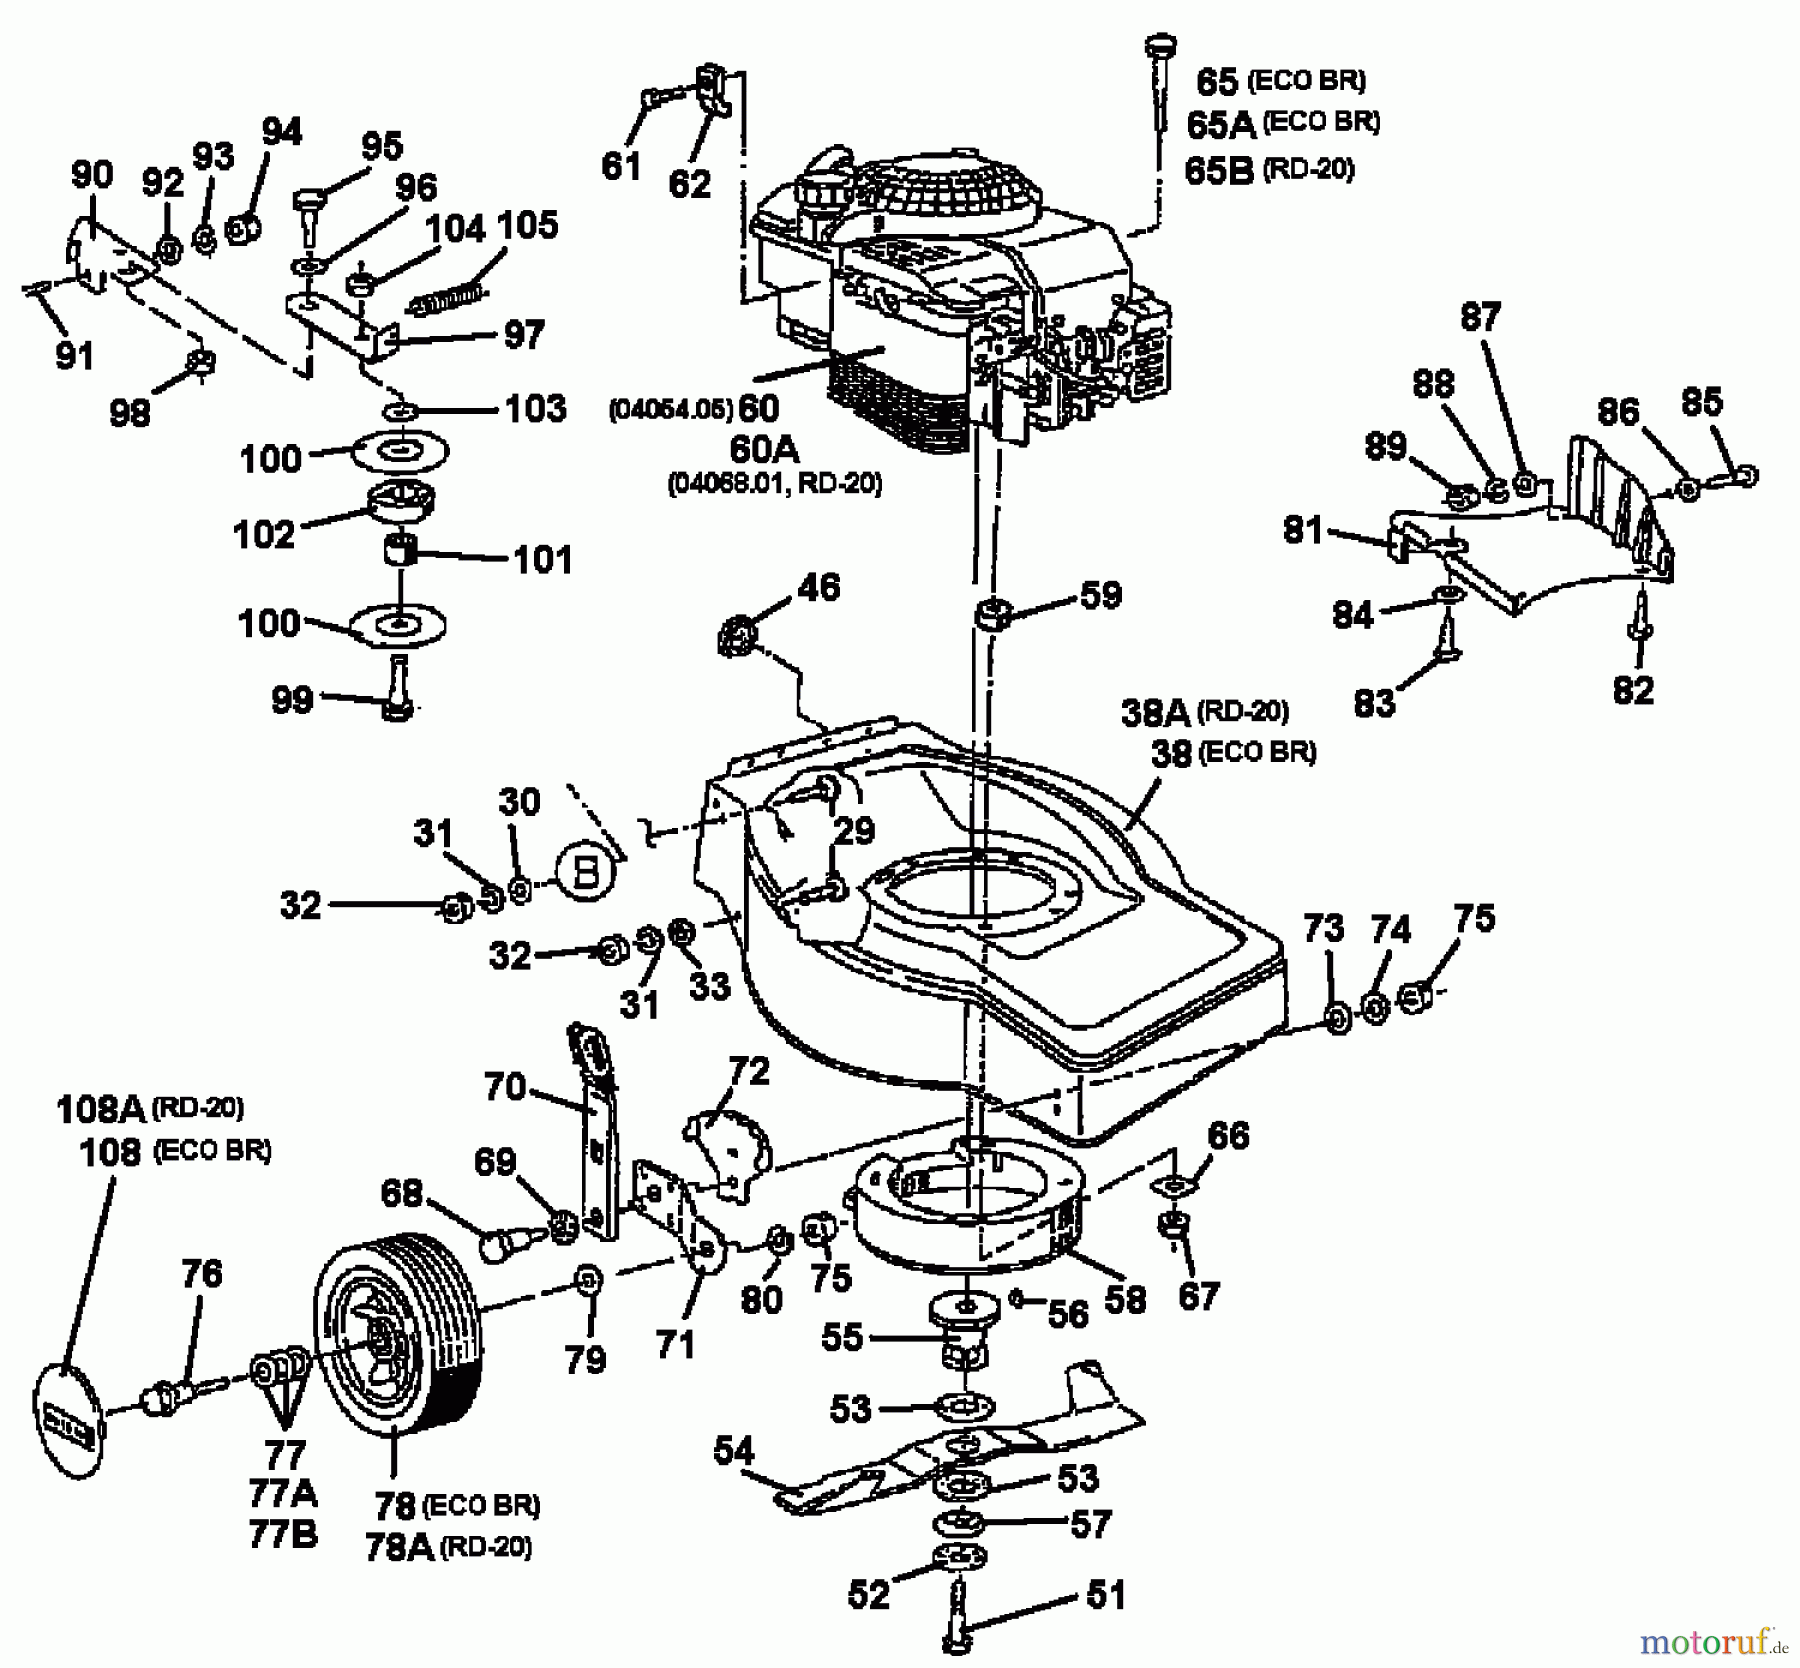  Gutbrod Motormäher mit Antrieb ECO BR 04054.05  (1997) Grundgerät